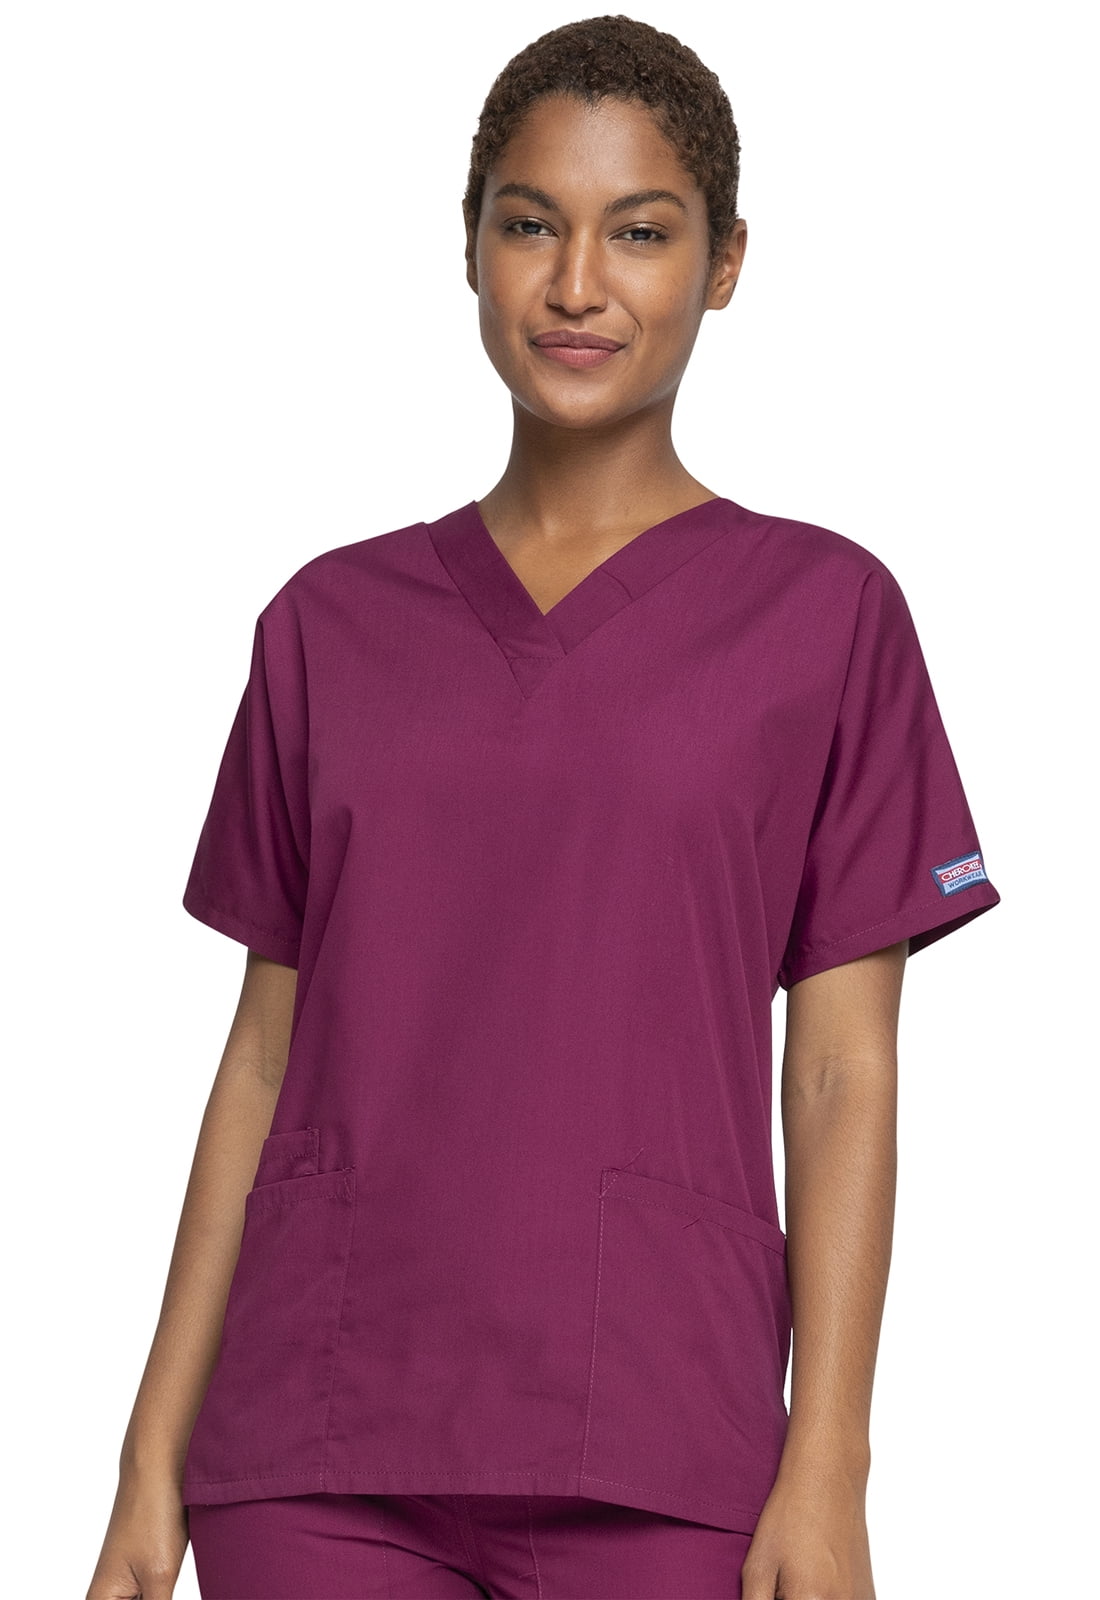 MEDICAL SCRUBS Cherokee Workwear Women V-Neck Top Short Sleeve shirt pocket 4700 